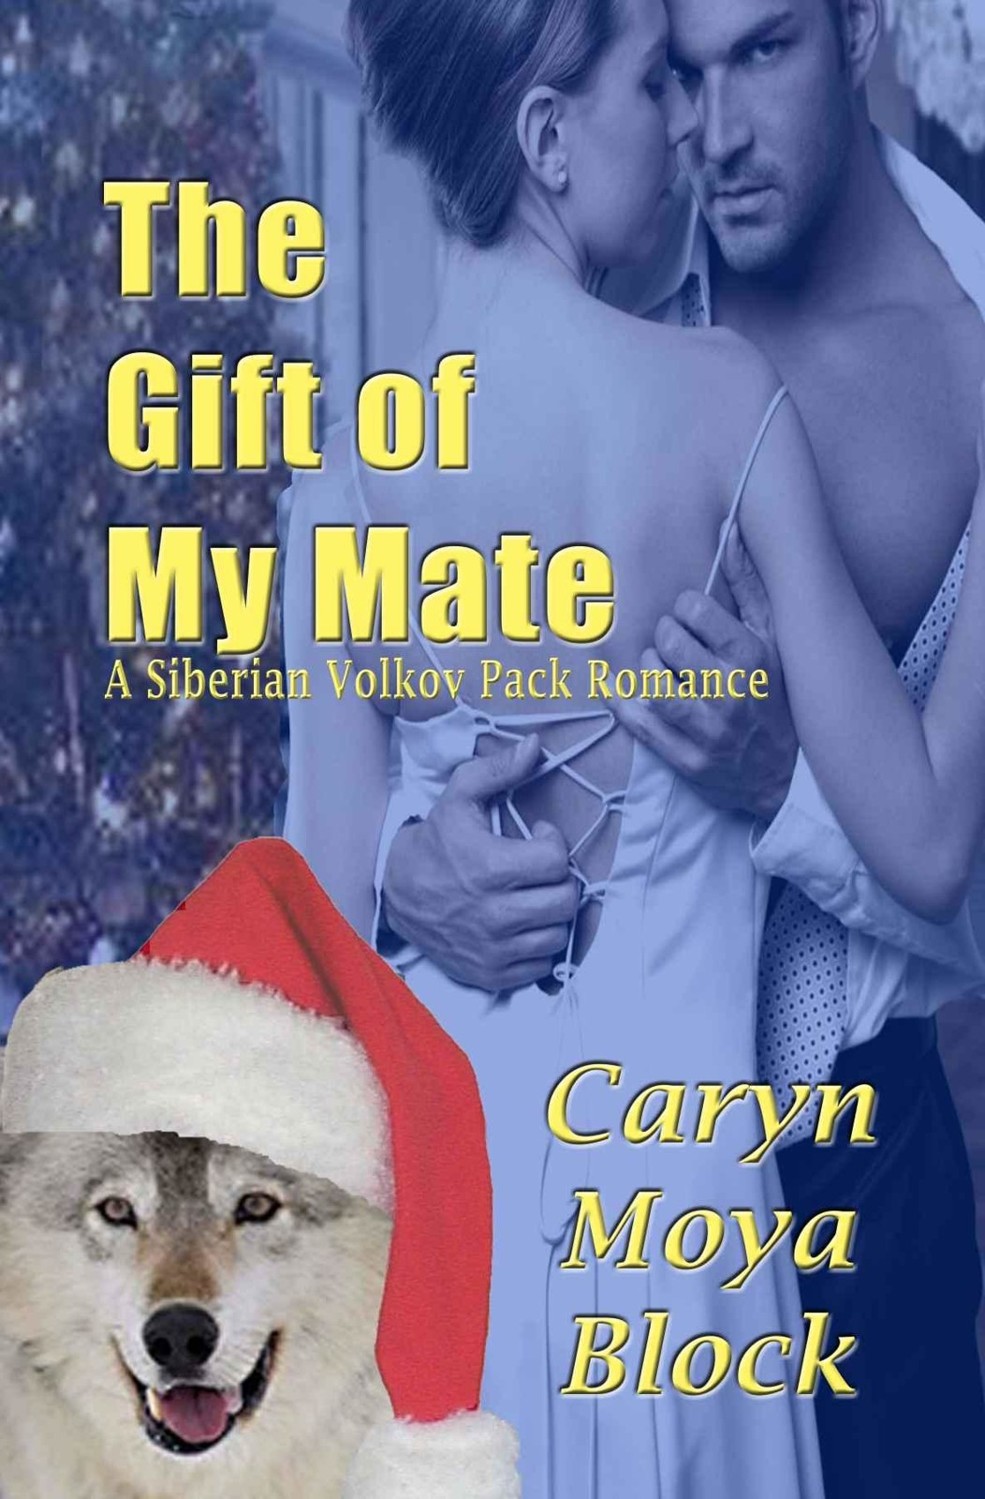 The Gift of My Mate (Siberian Volkov Pack Romance Book 9) by Caryn Moya Block